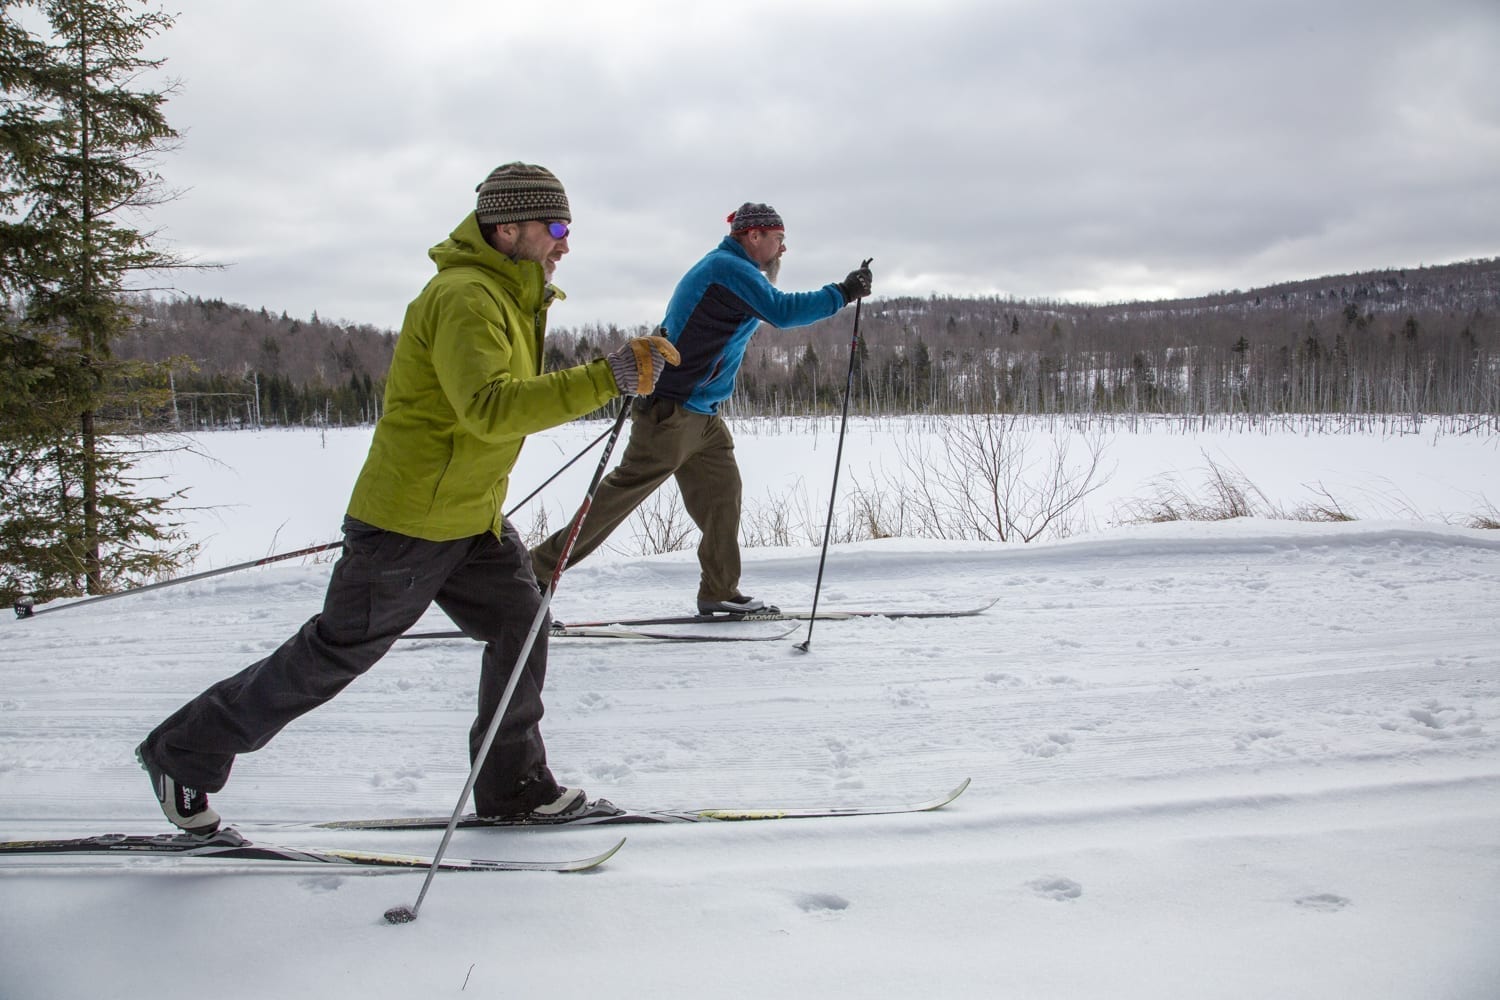 Five ideas for late-season ski trips